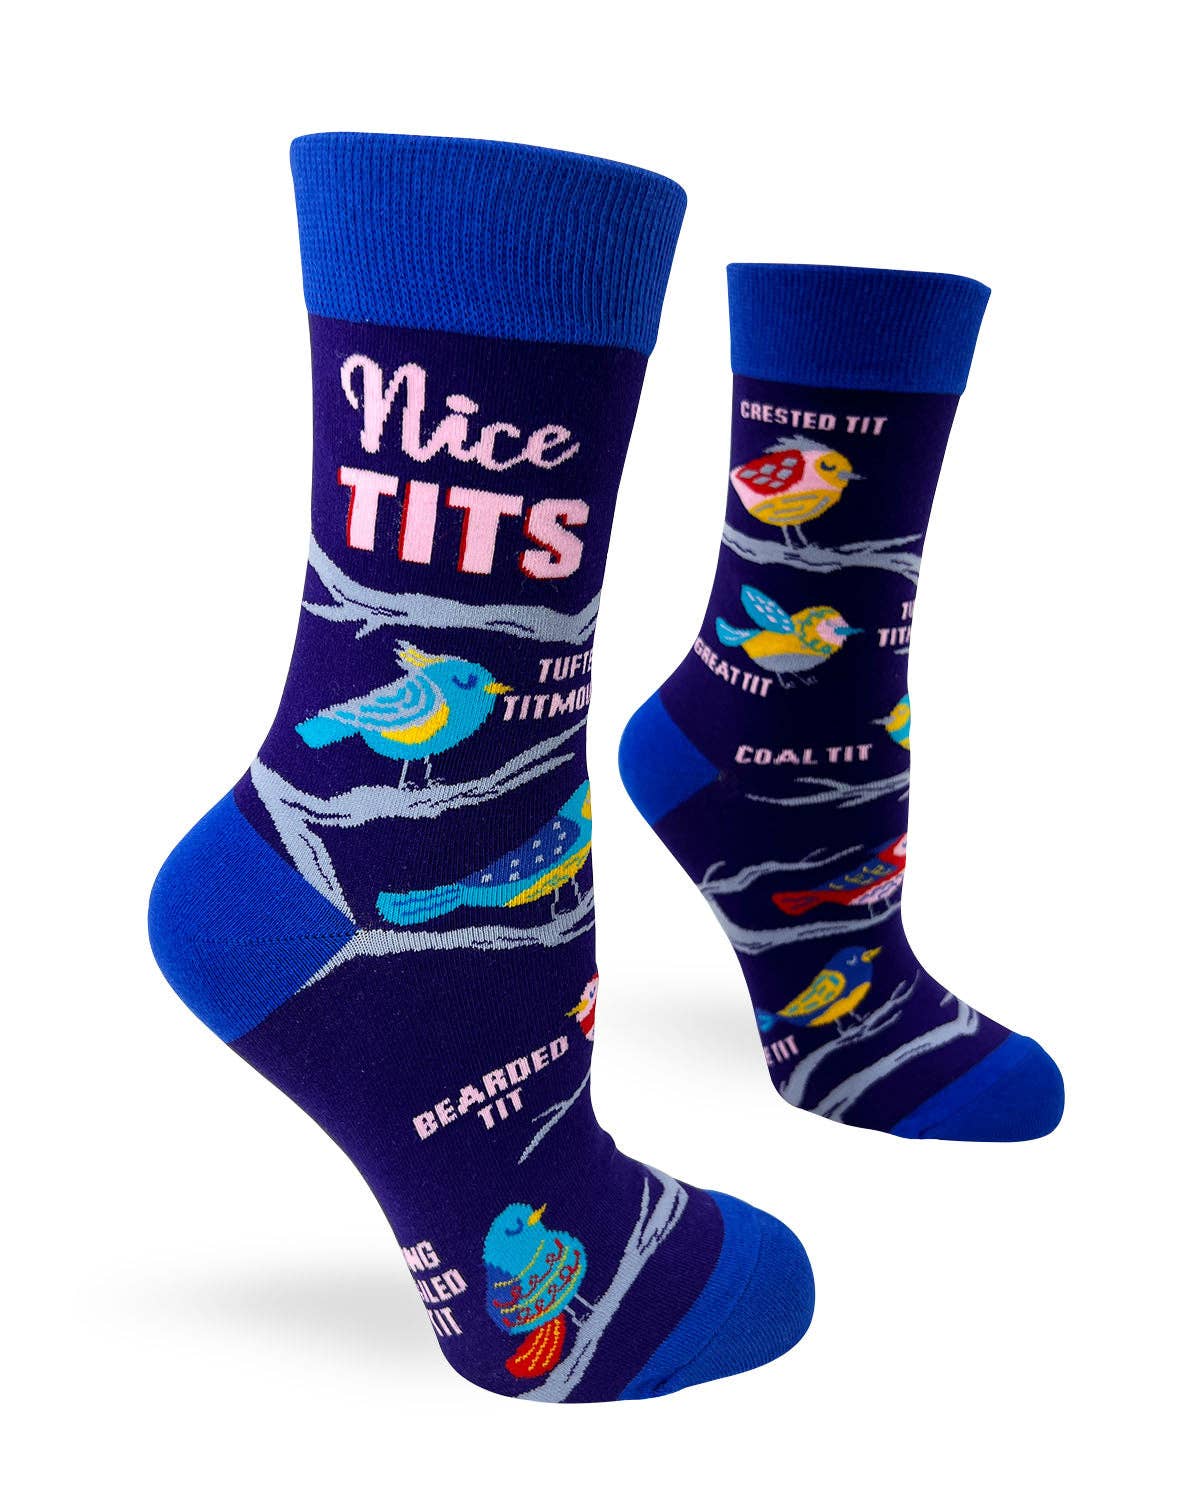 "Nice Tits" - Women's Socks